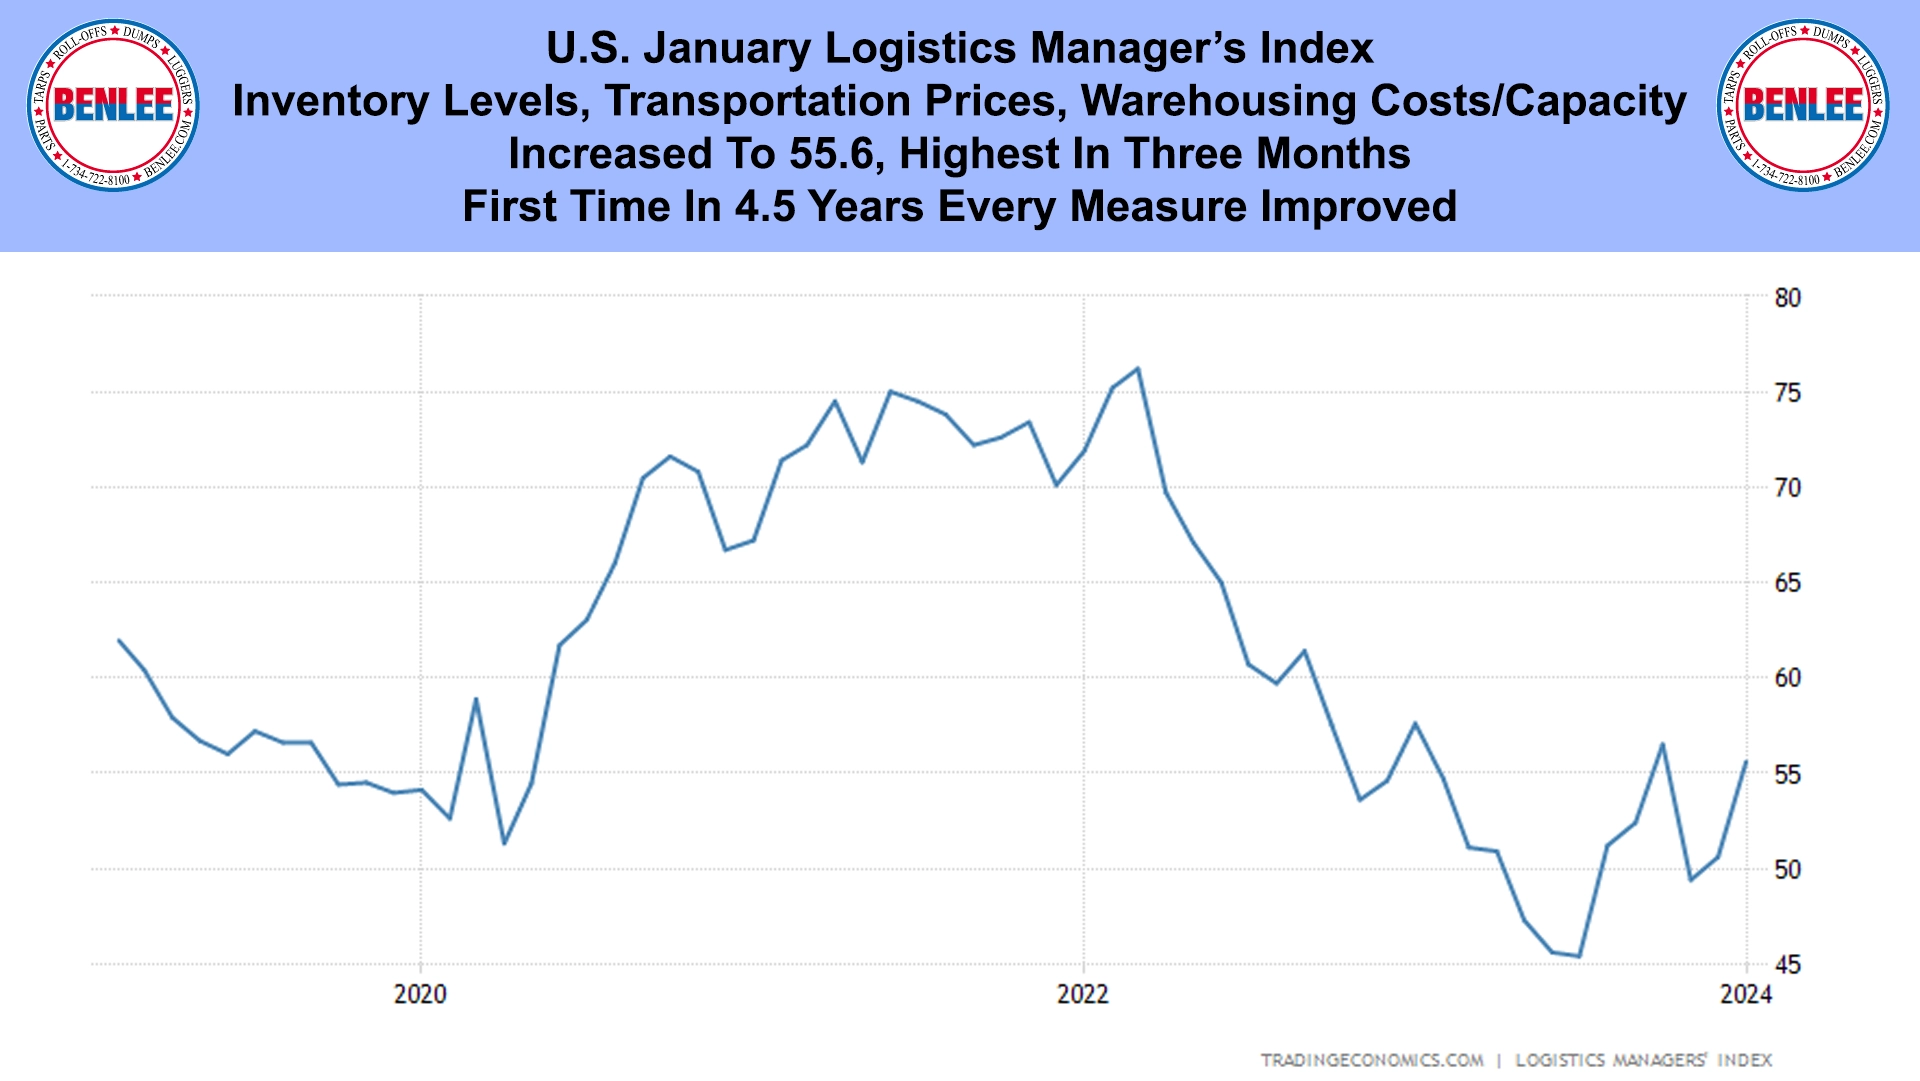 U.S. January Logistics Manager’s Index